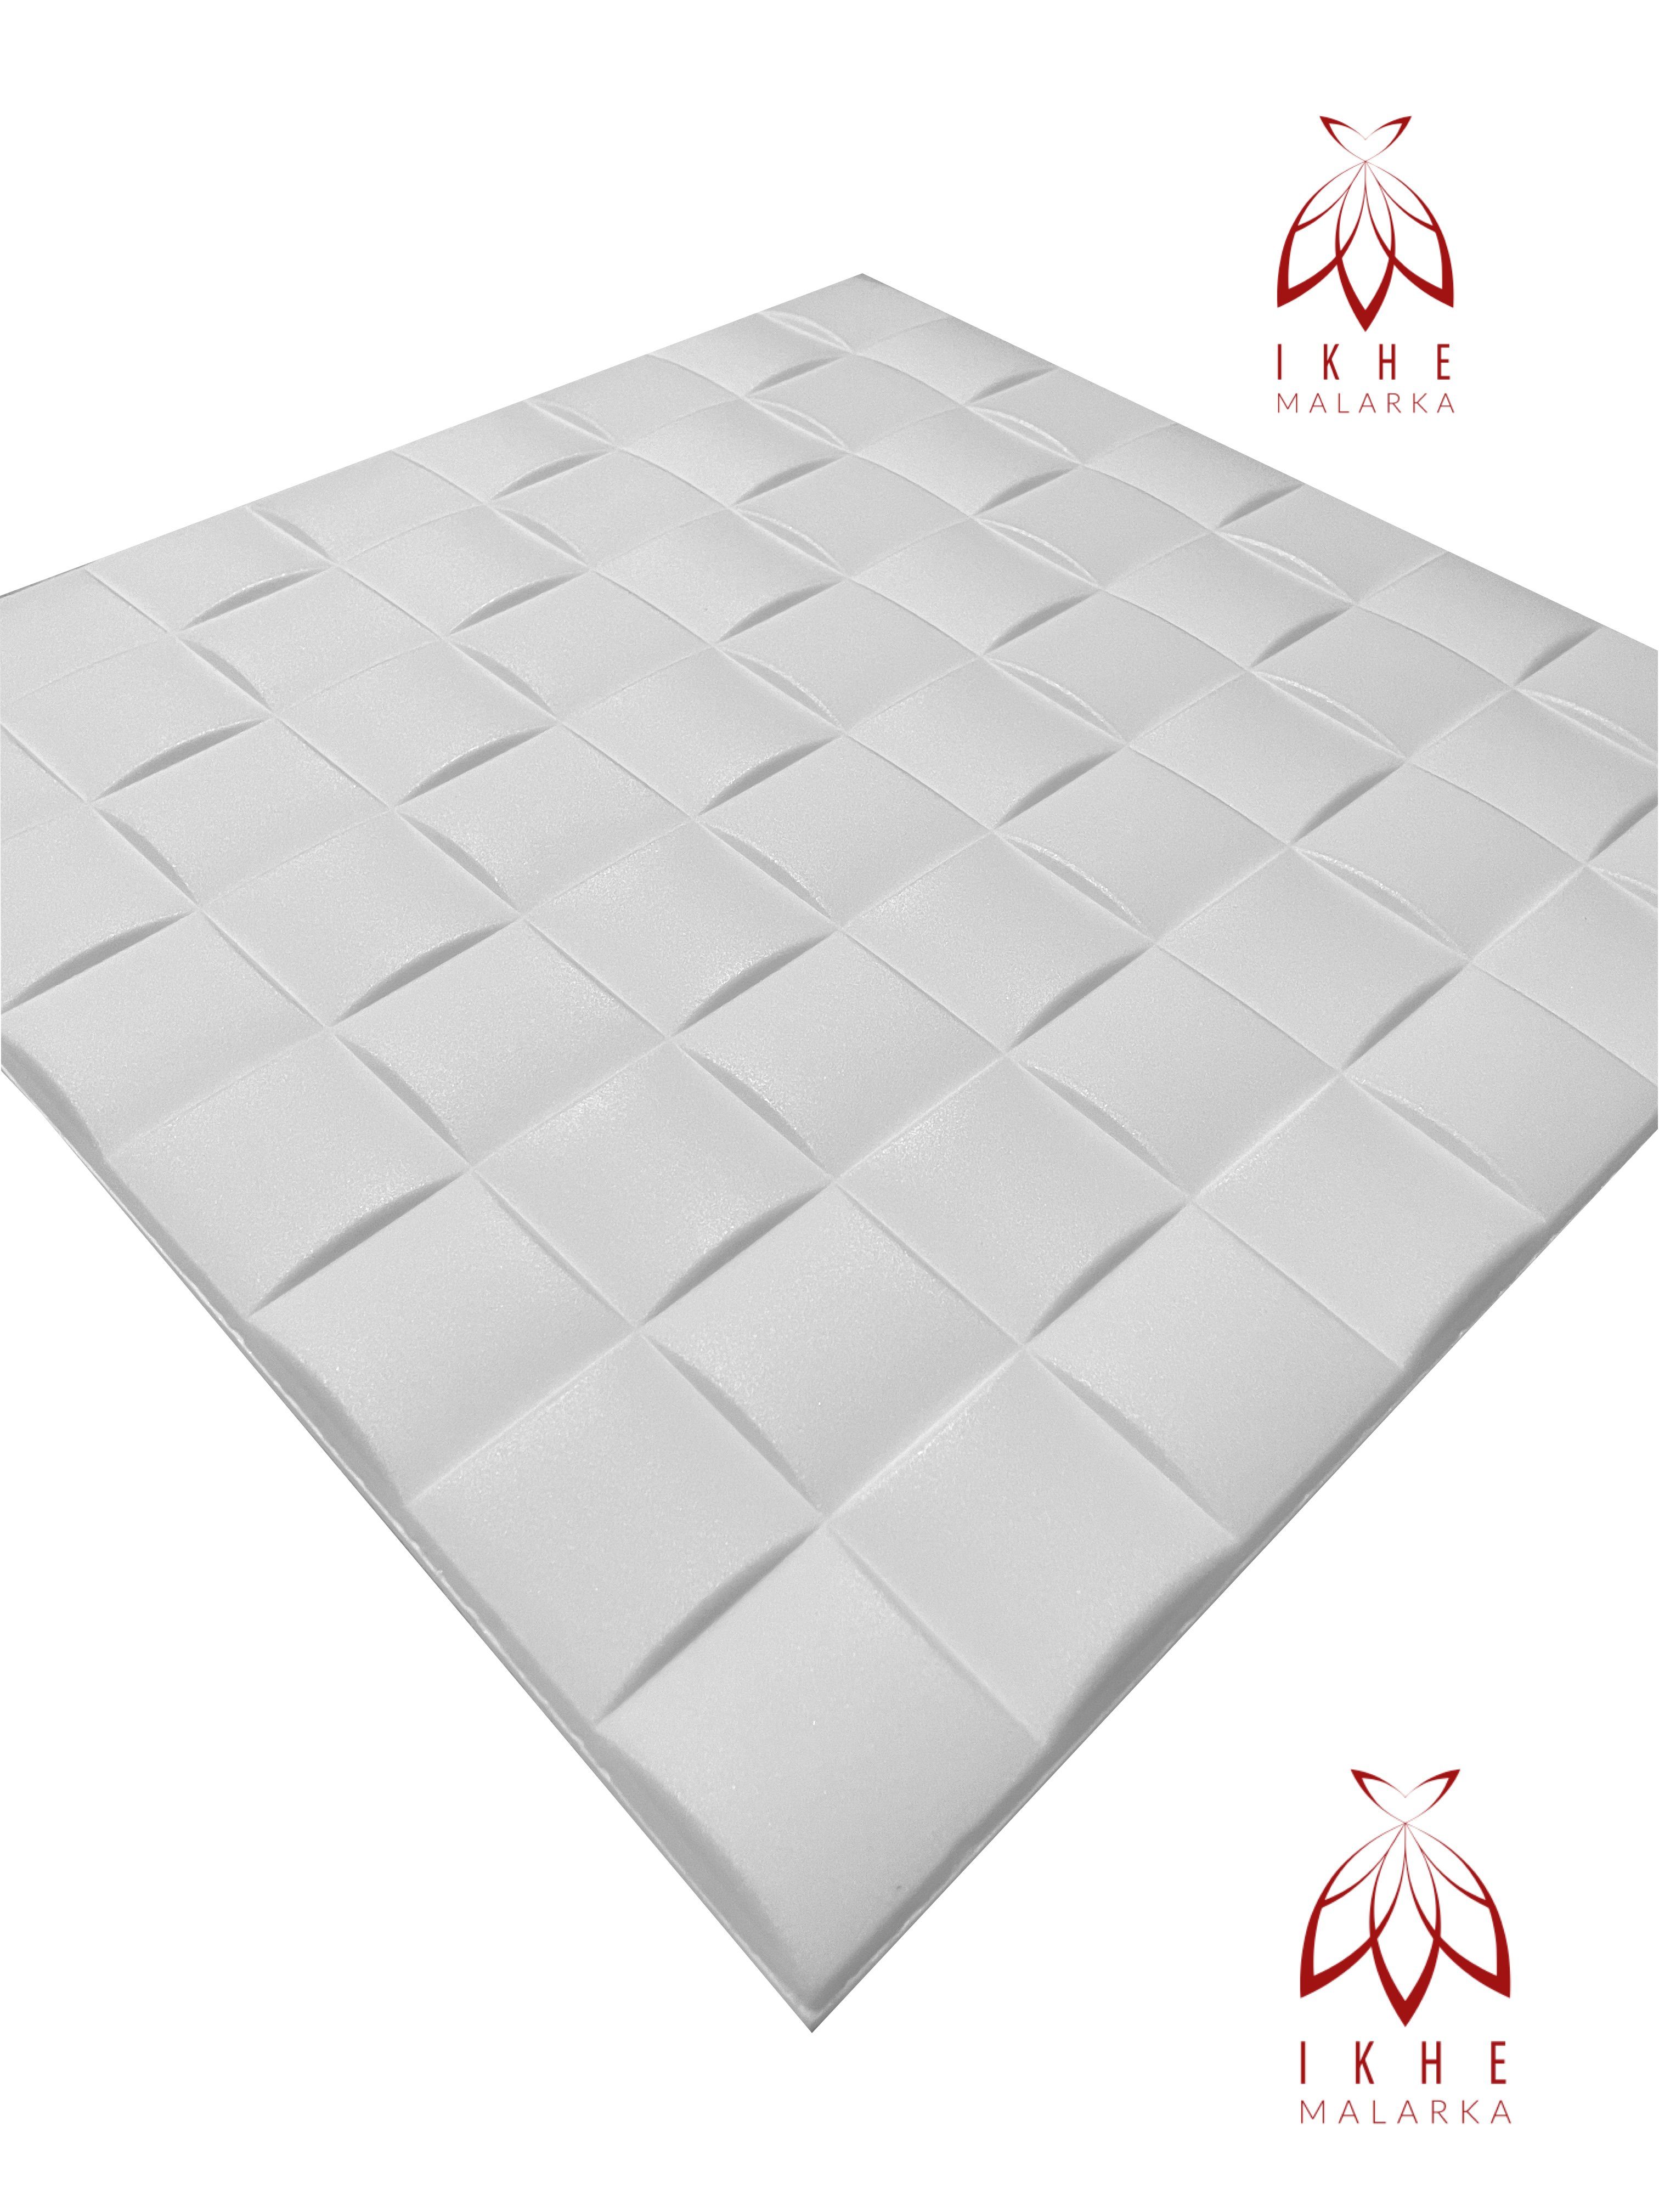 8 XPS, BxL: = Wandpaneel Stück 3D (Platten IKHEMalarka 0816 qm, Dekoren, stark 50,00x50,00 cm, Paneele) 2m² 0,25 Deckenpaneele 2mm Polystyrol Polystyrol